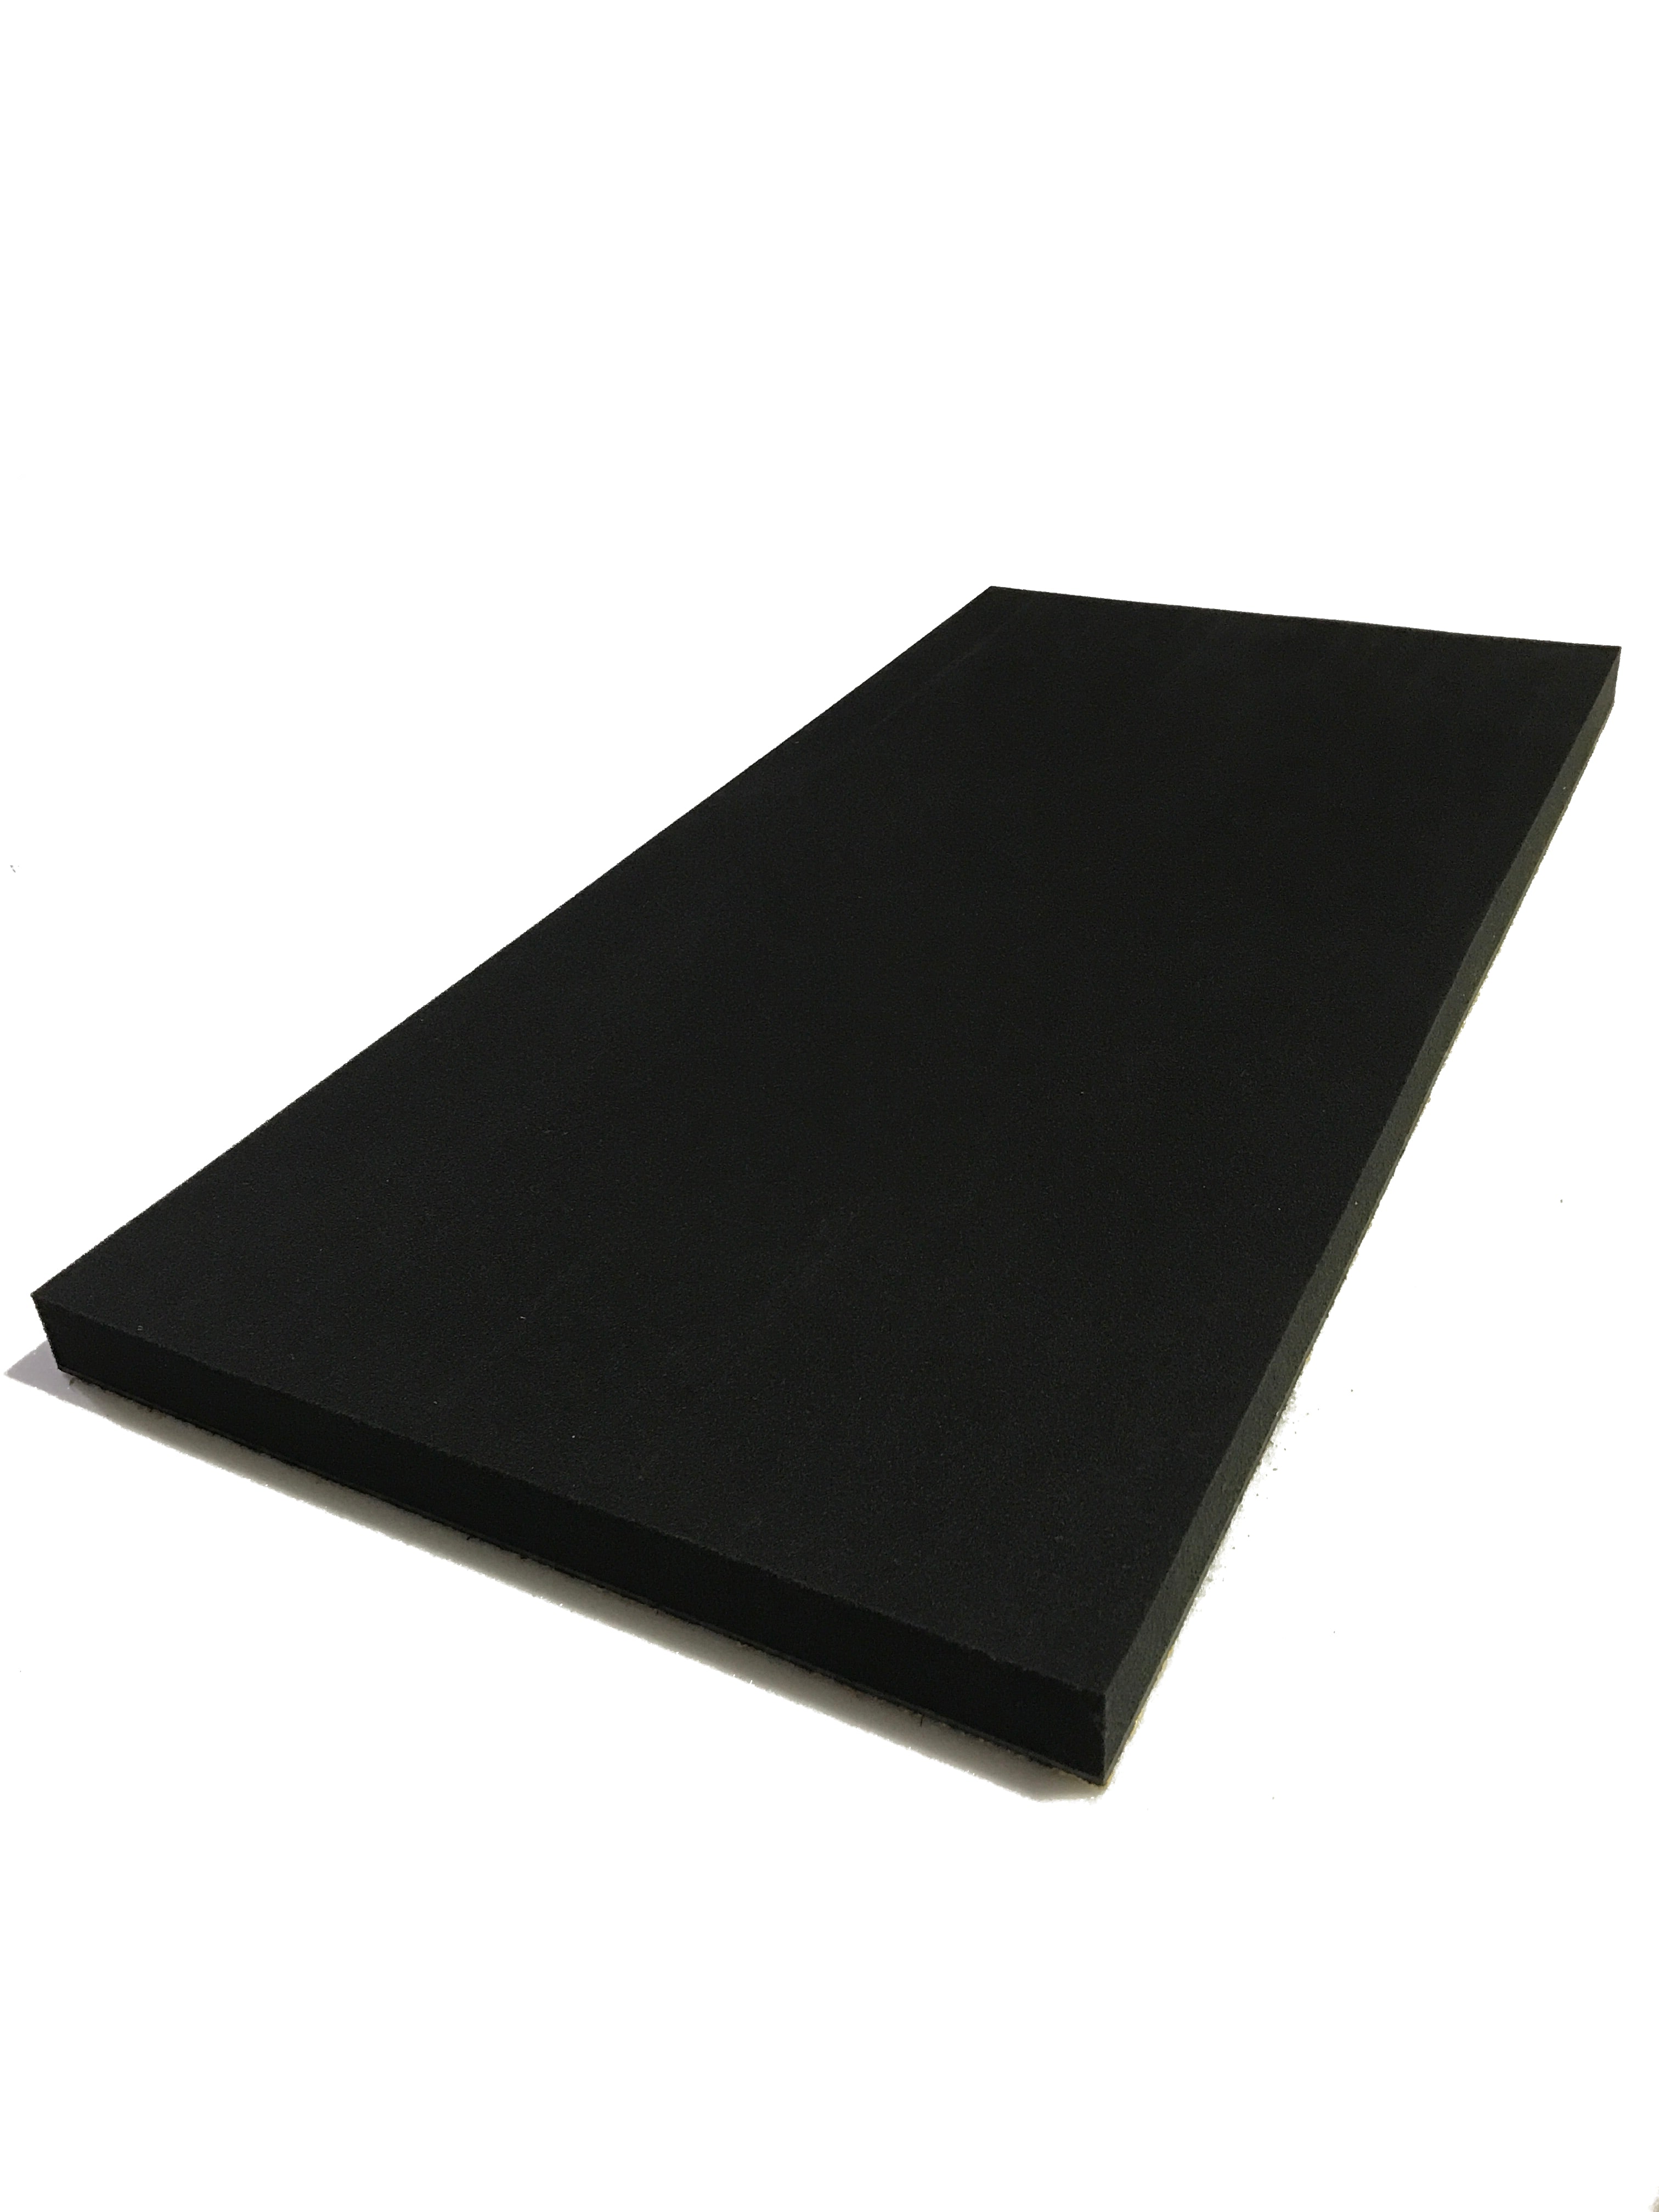 Silent Panel 5kg/50mm 600x1200- Barrier Foam Composite Acoustic Panel Adhesive Backed - Advanced Acoustics